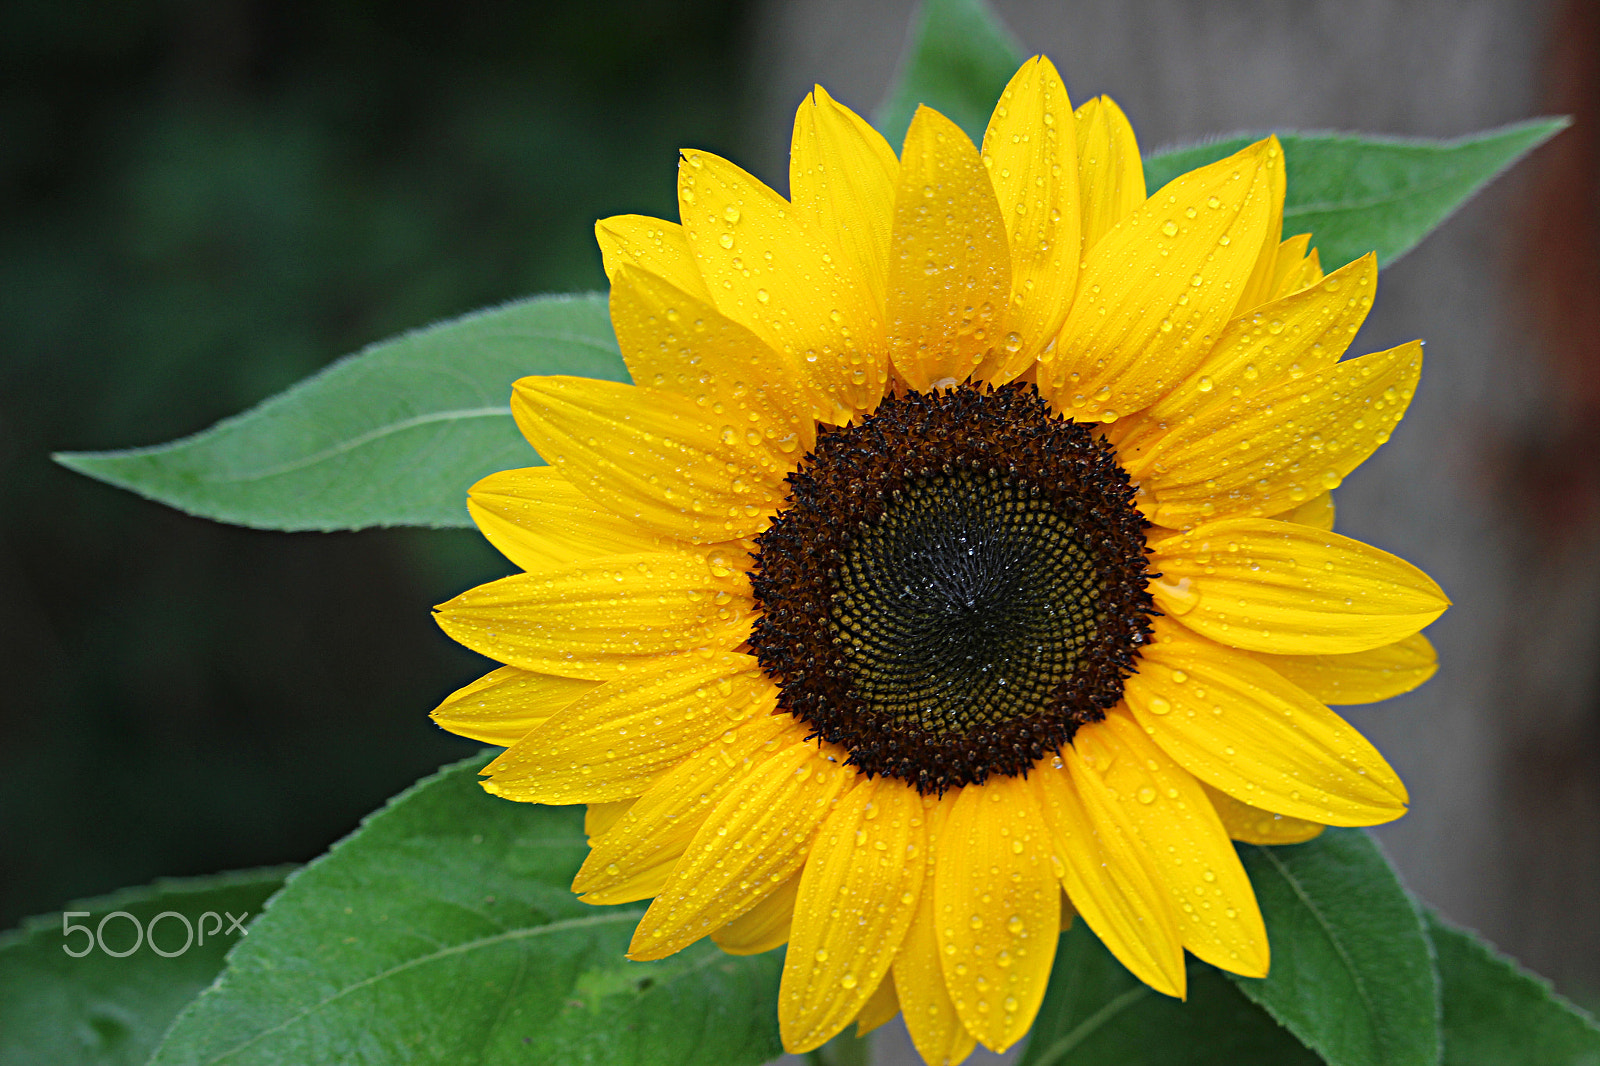 55.0 - 250.0 mm sample photo. Wet sunflower photography